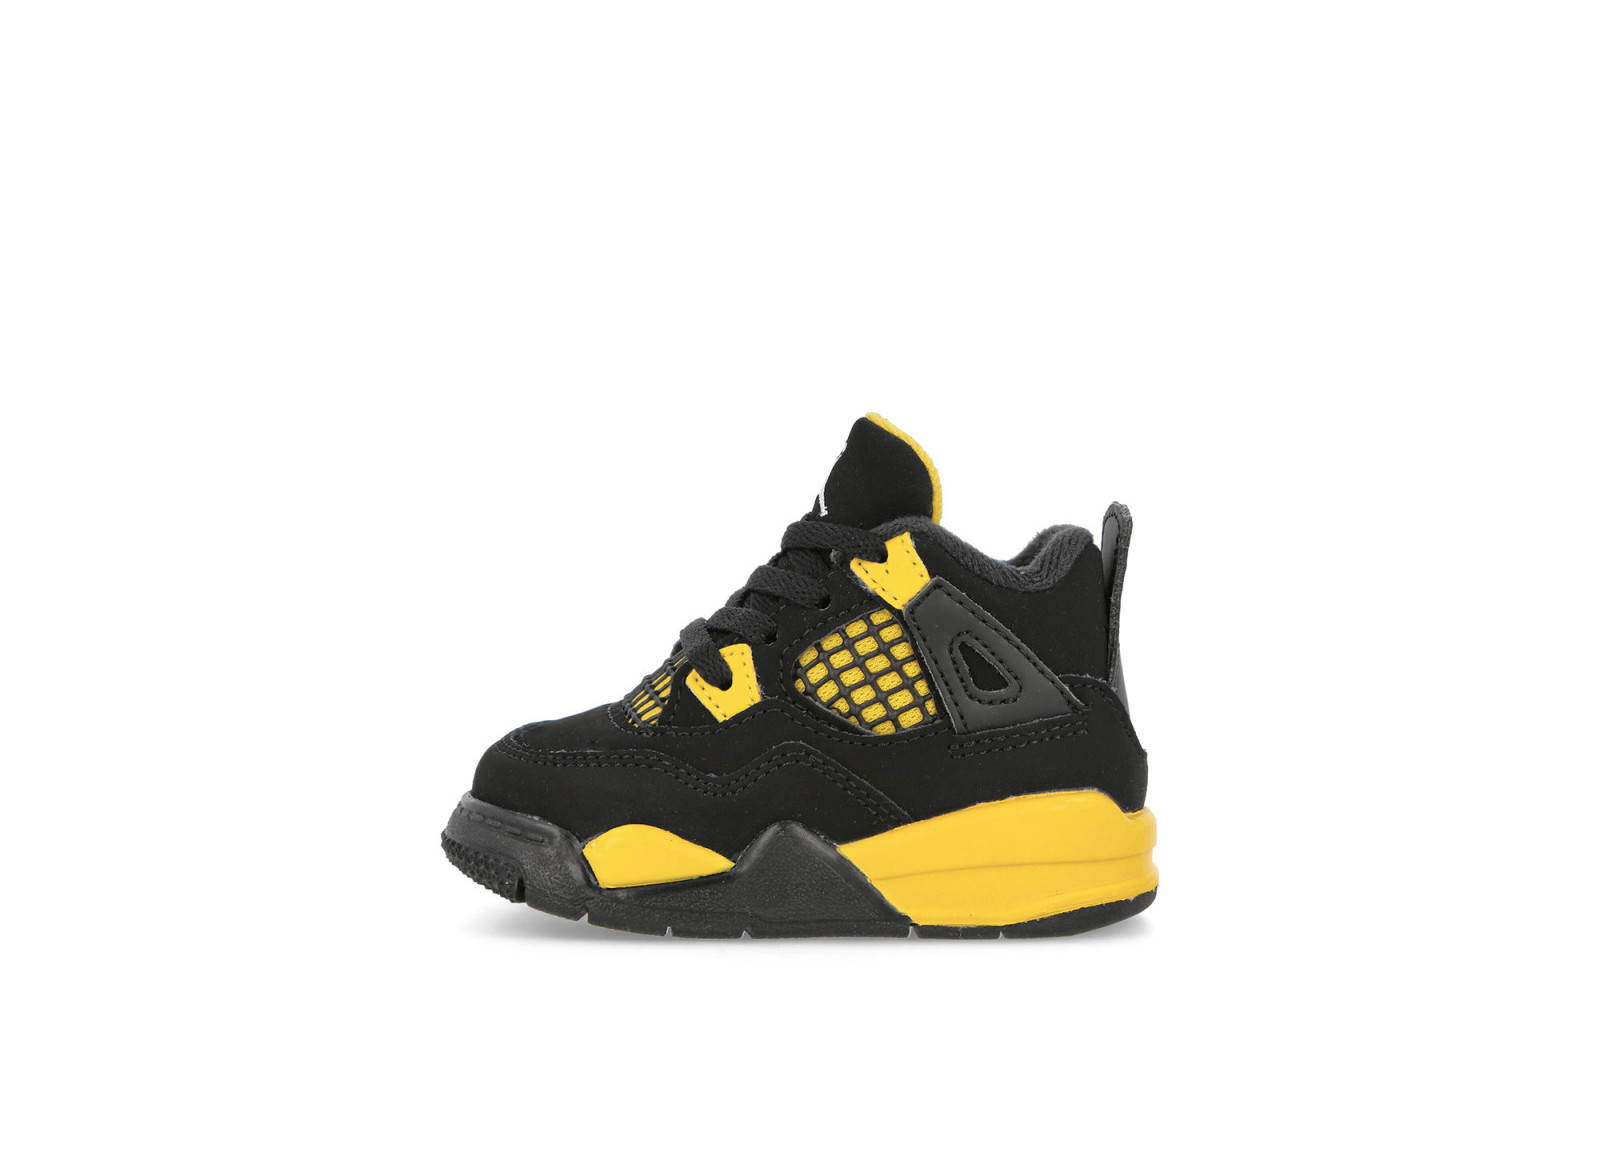 Air Jordan 4 Retro (TD)
« Tour Yellow »